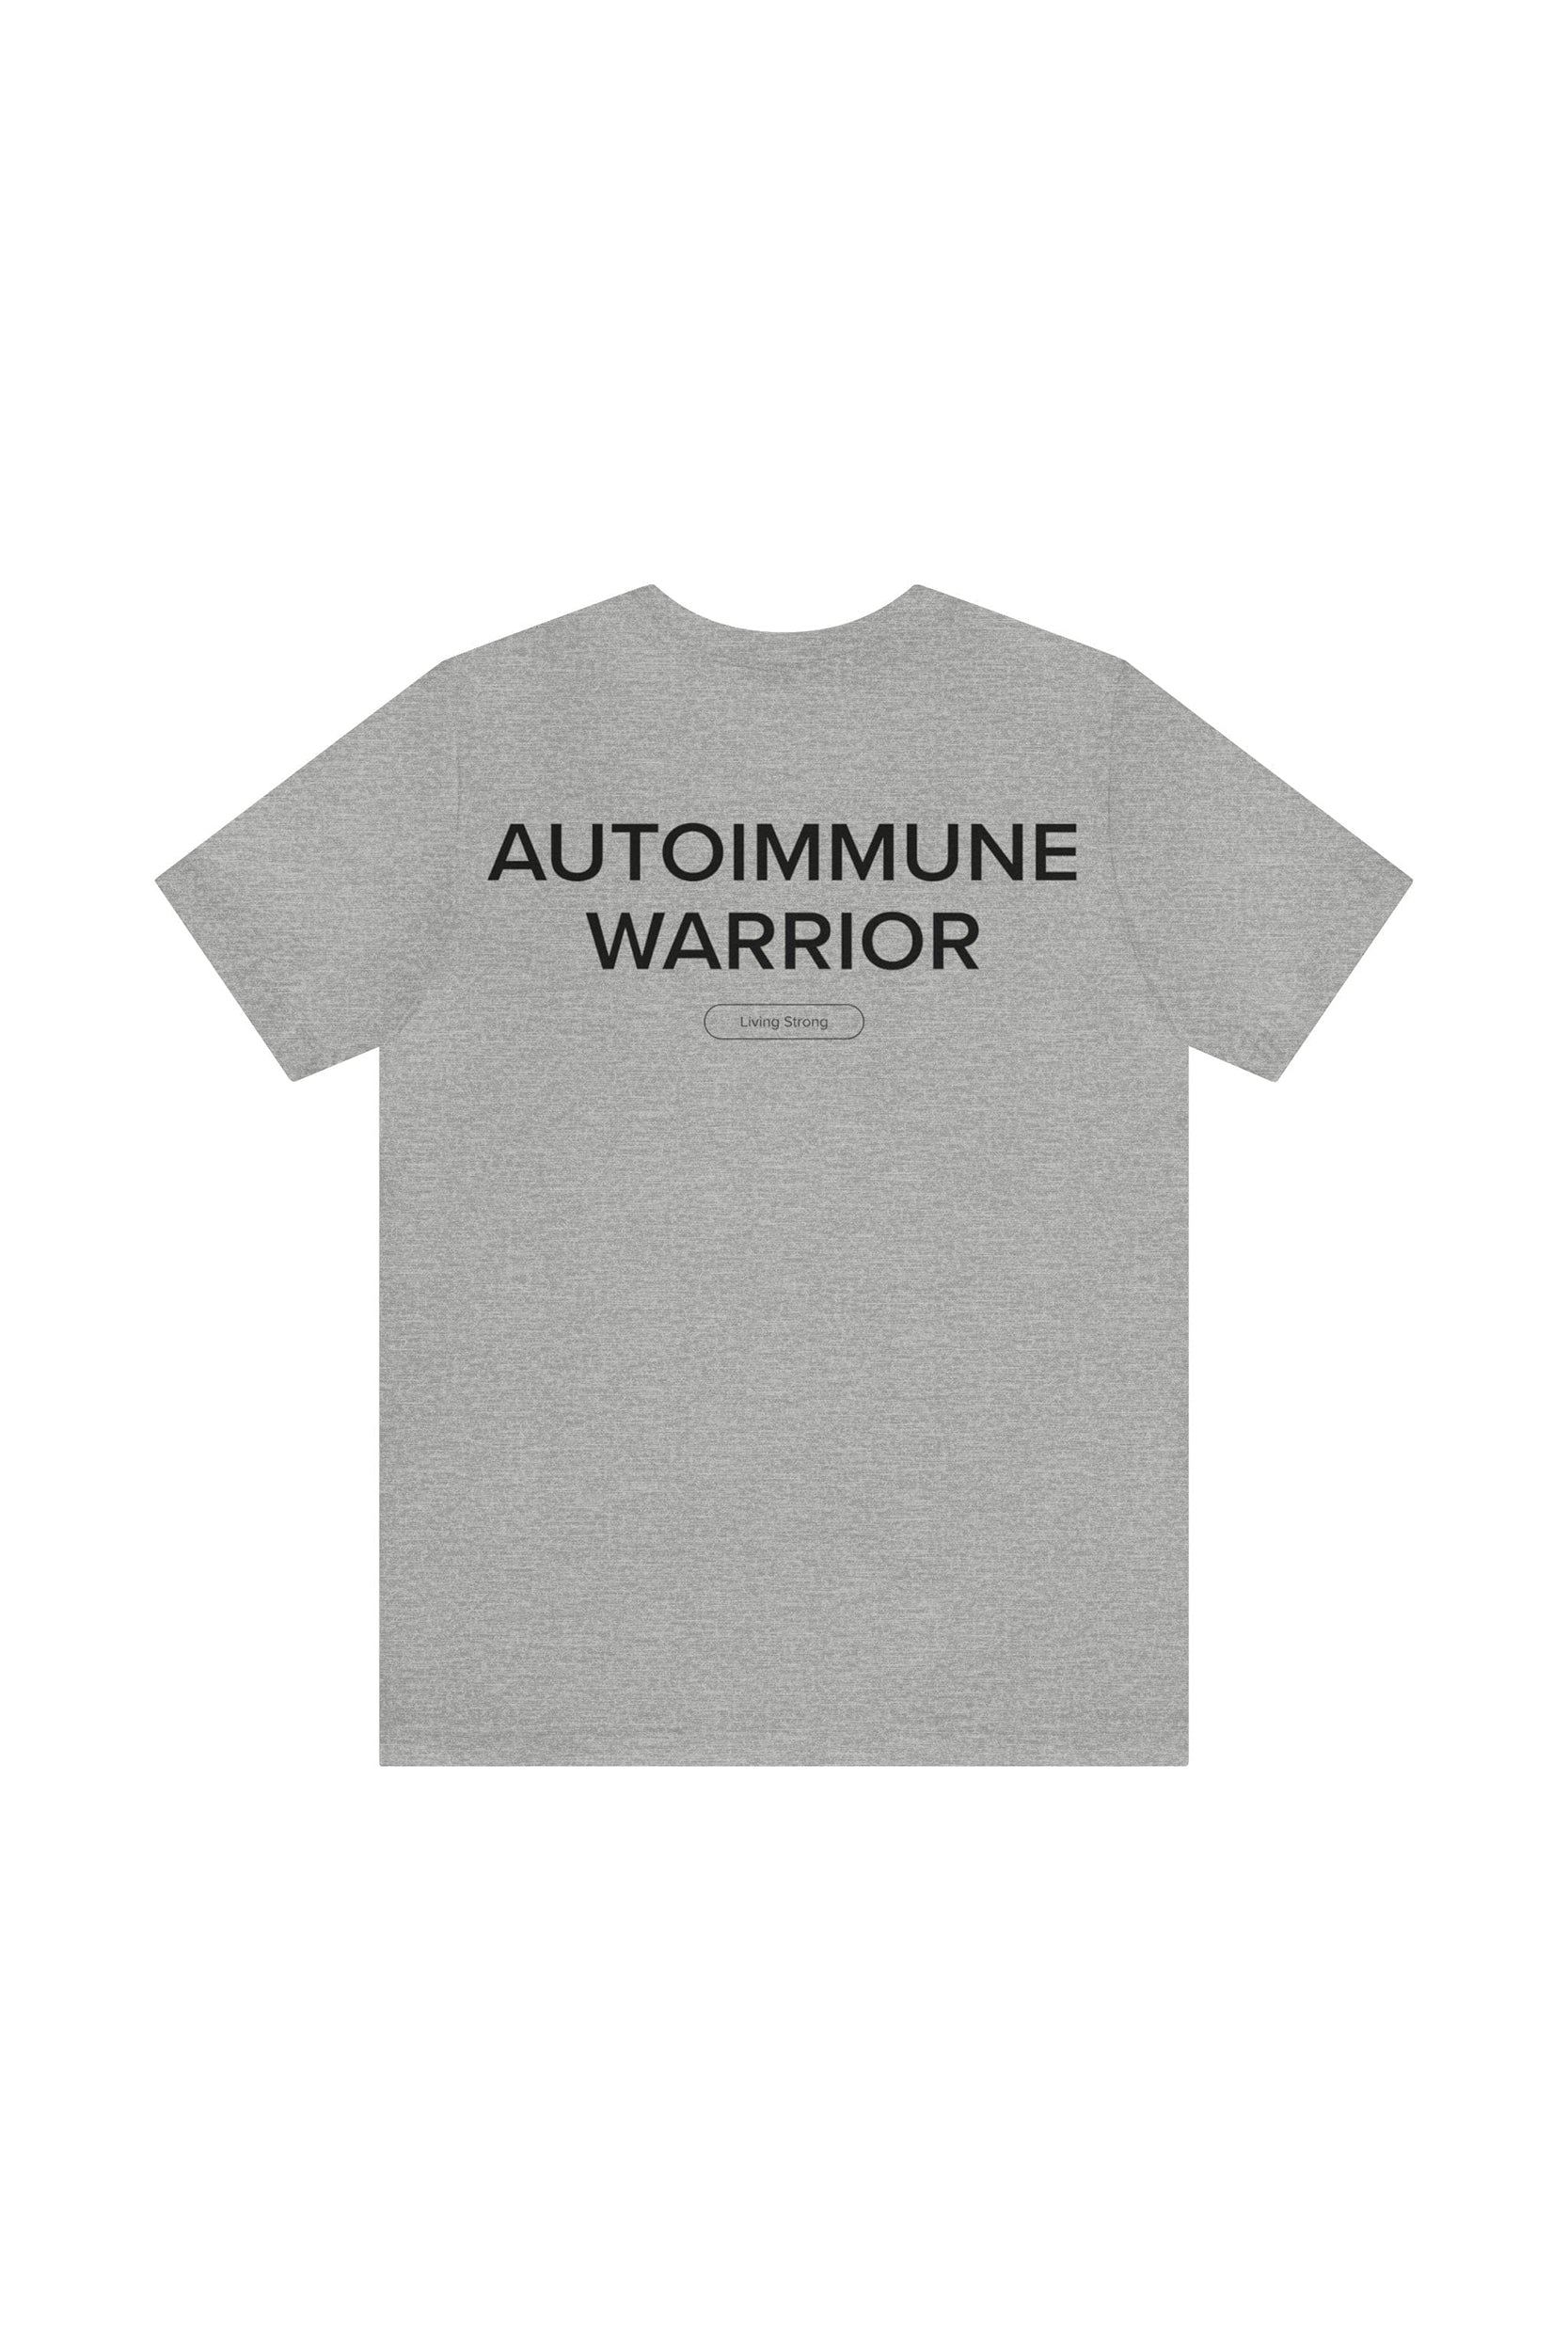 "AUTOIMMUNE WARRIOR" T-Shirt